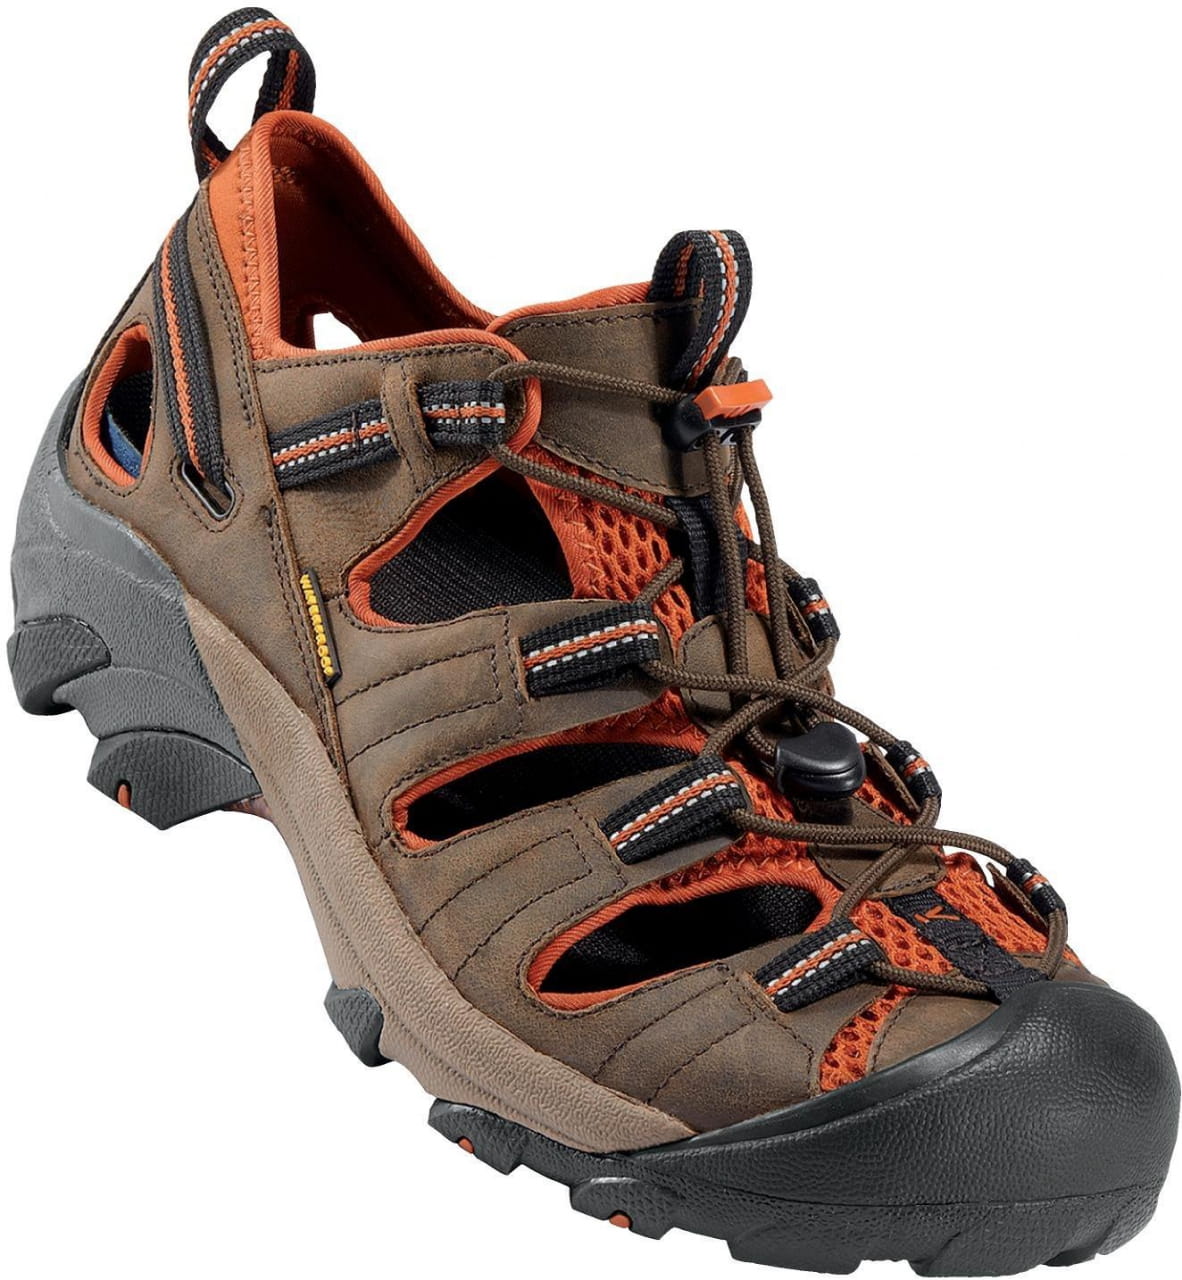 Outdoor-Schuhe für Männer Keen Arroyo II M